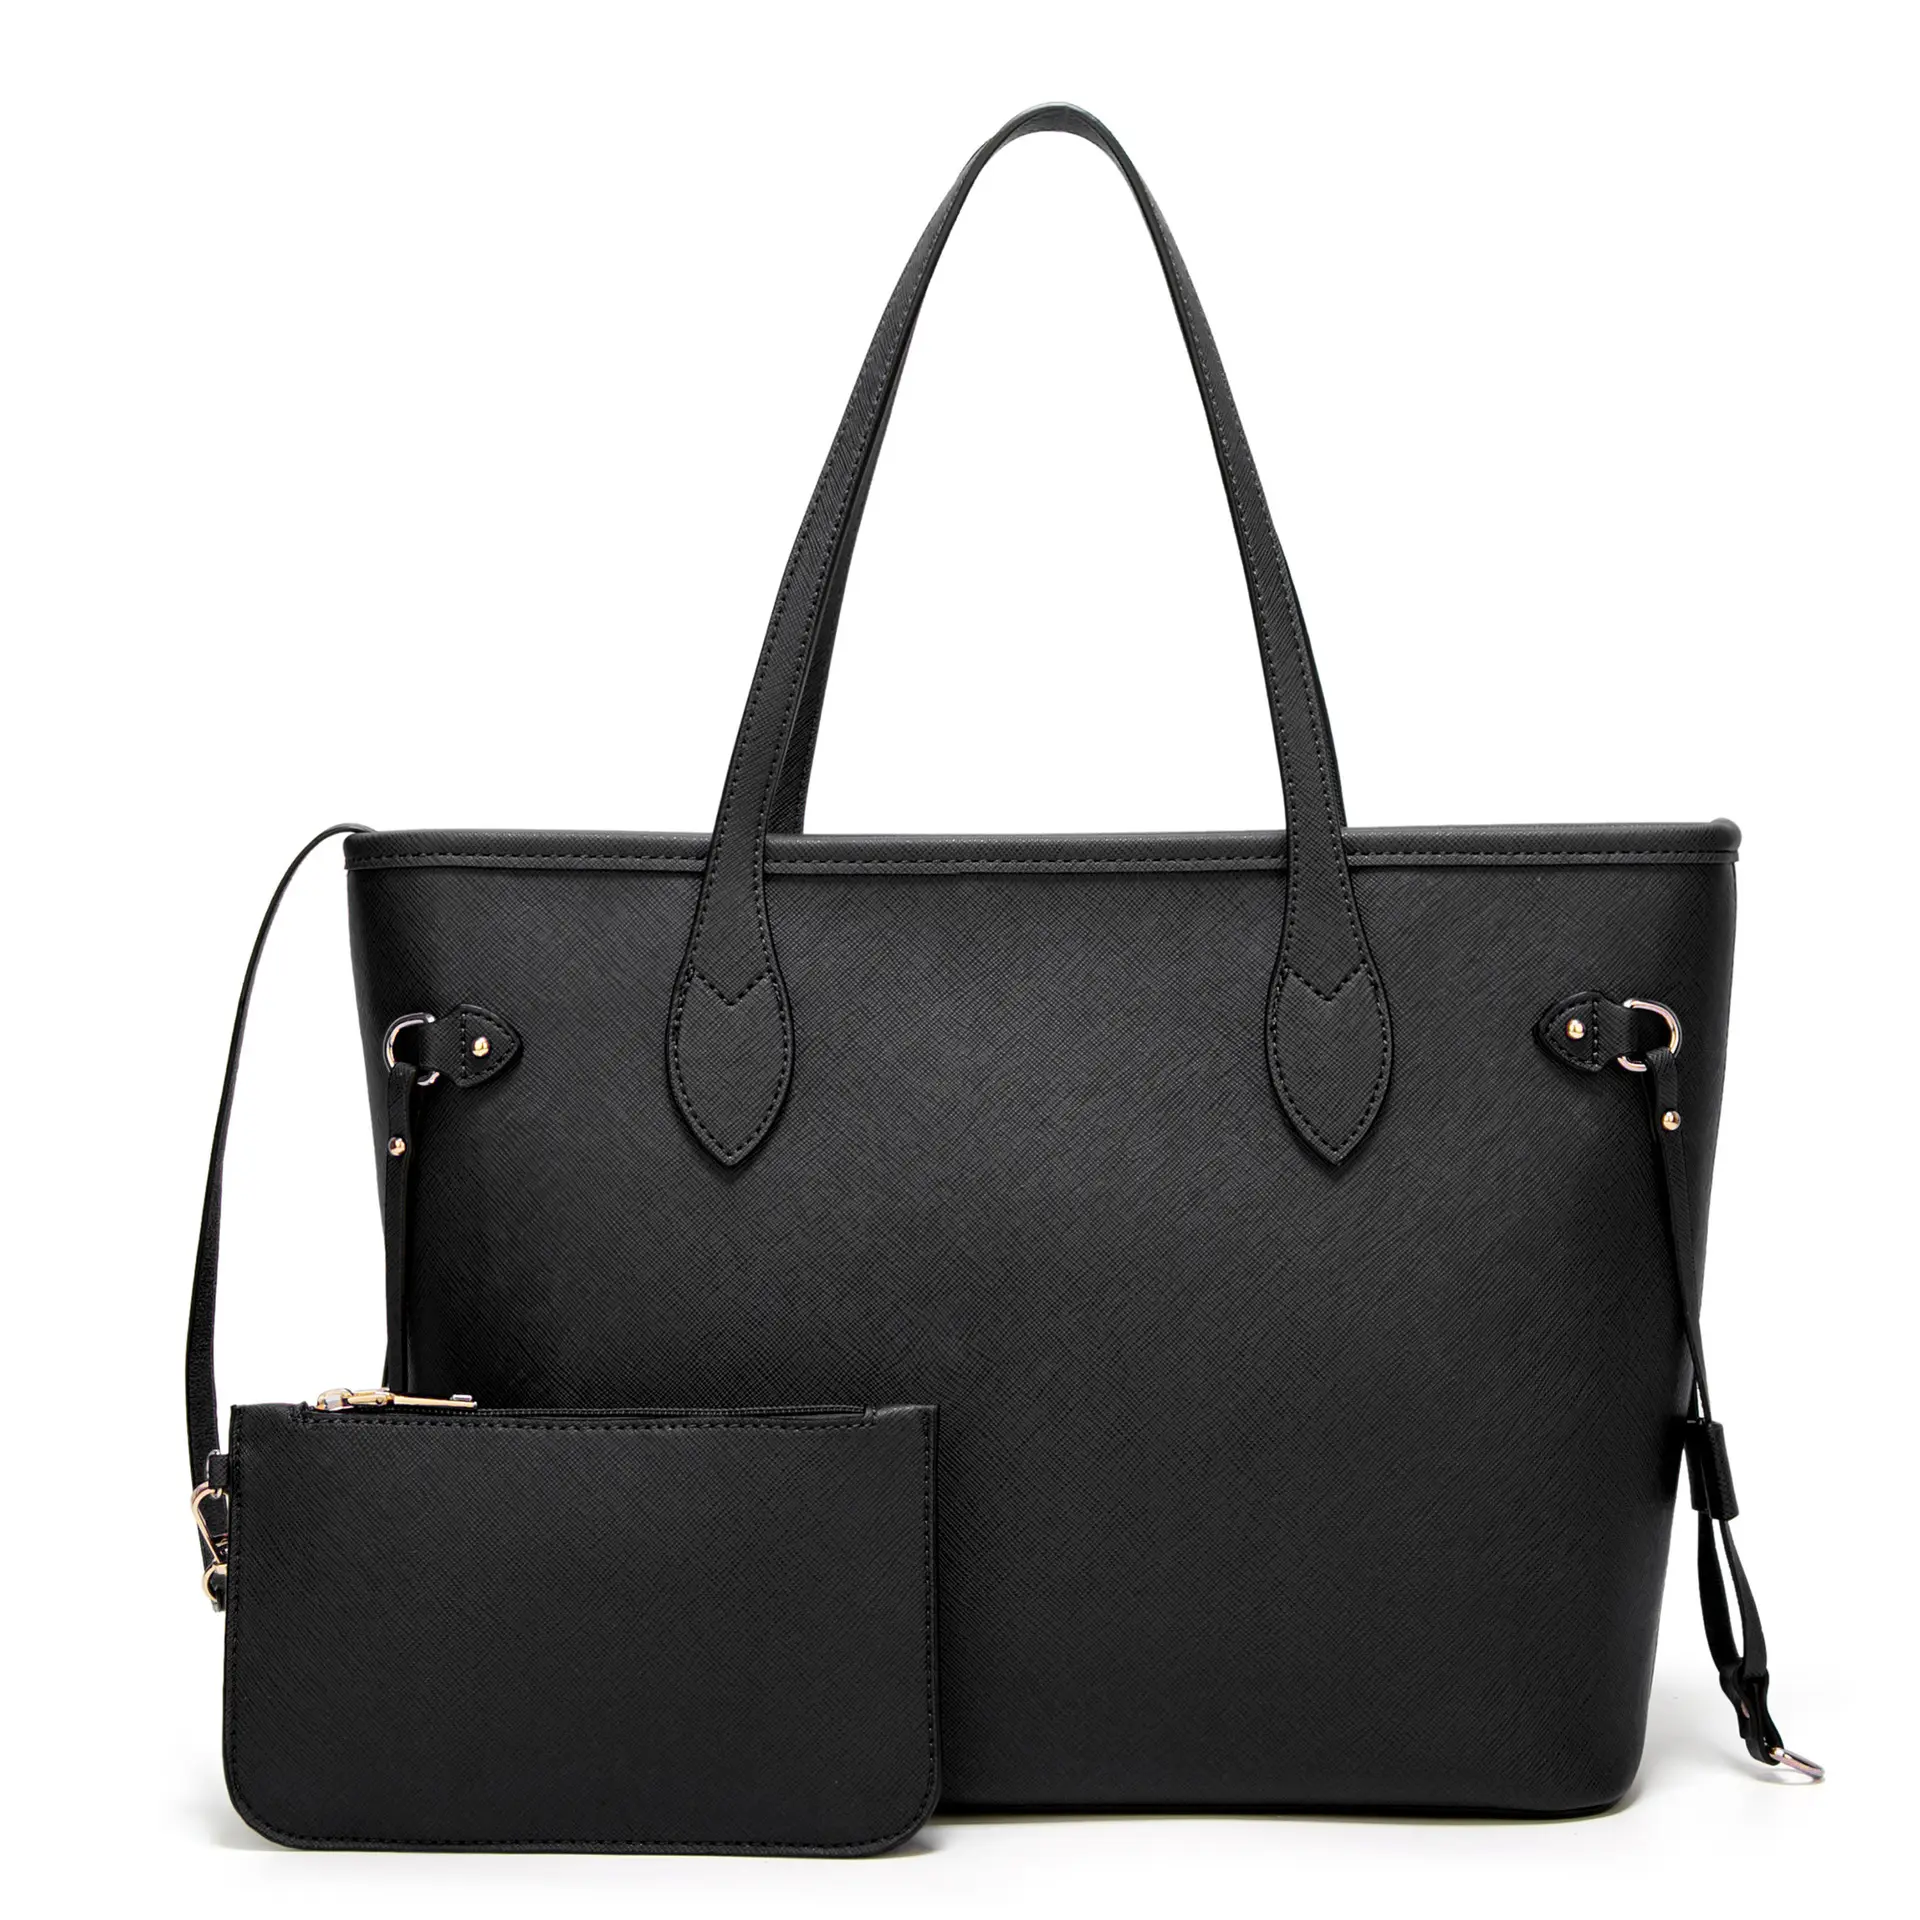 Fashion Pu leather Tote Handbags Women Purses Shoulder Bag Pocketbooks Purses,Black Tote Purses and Handbags for Women